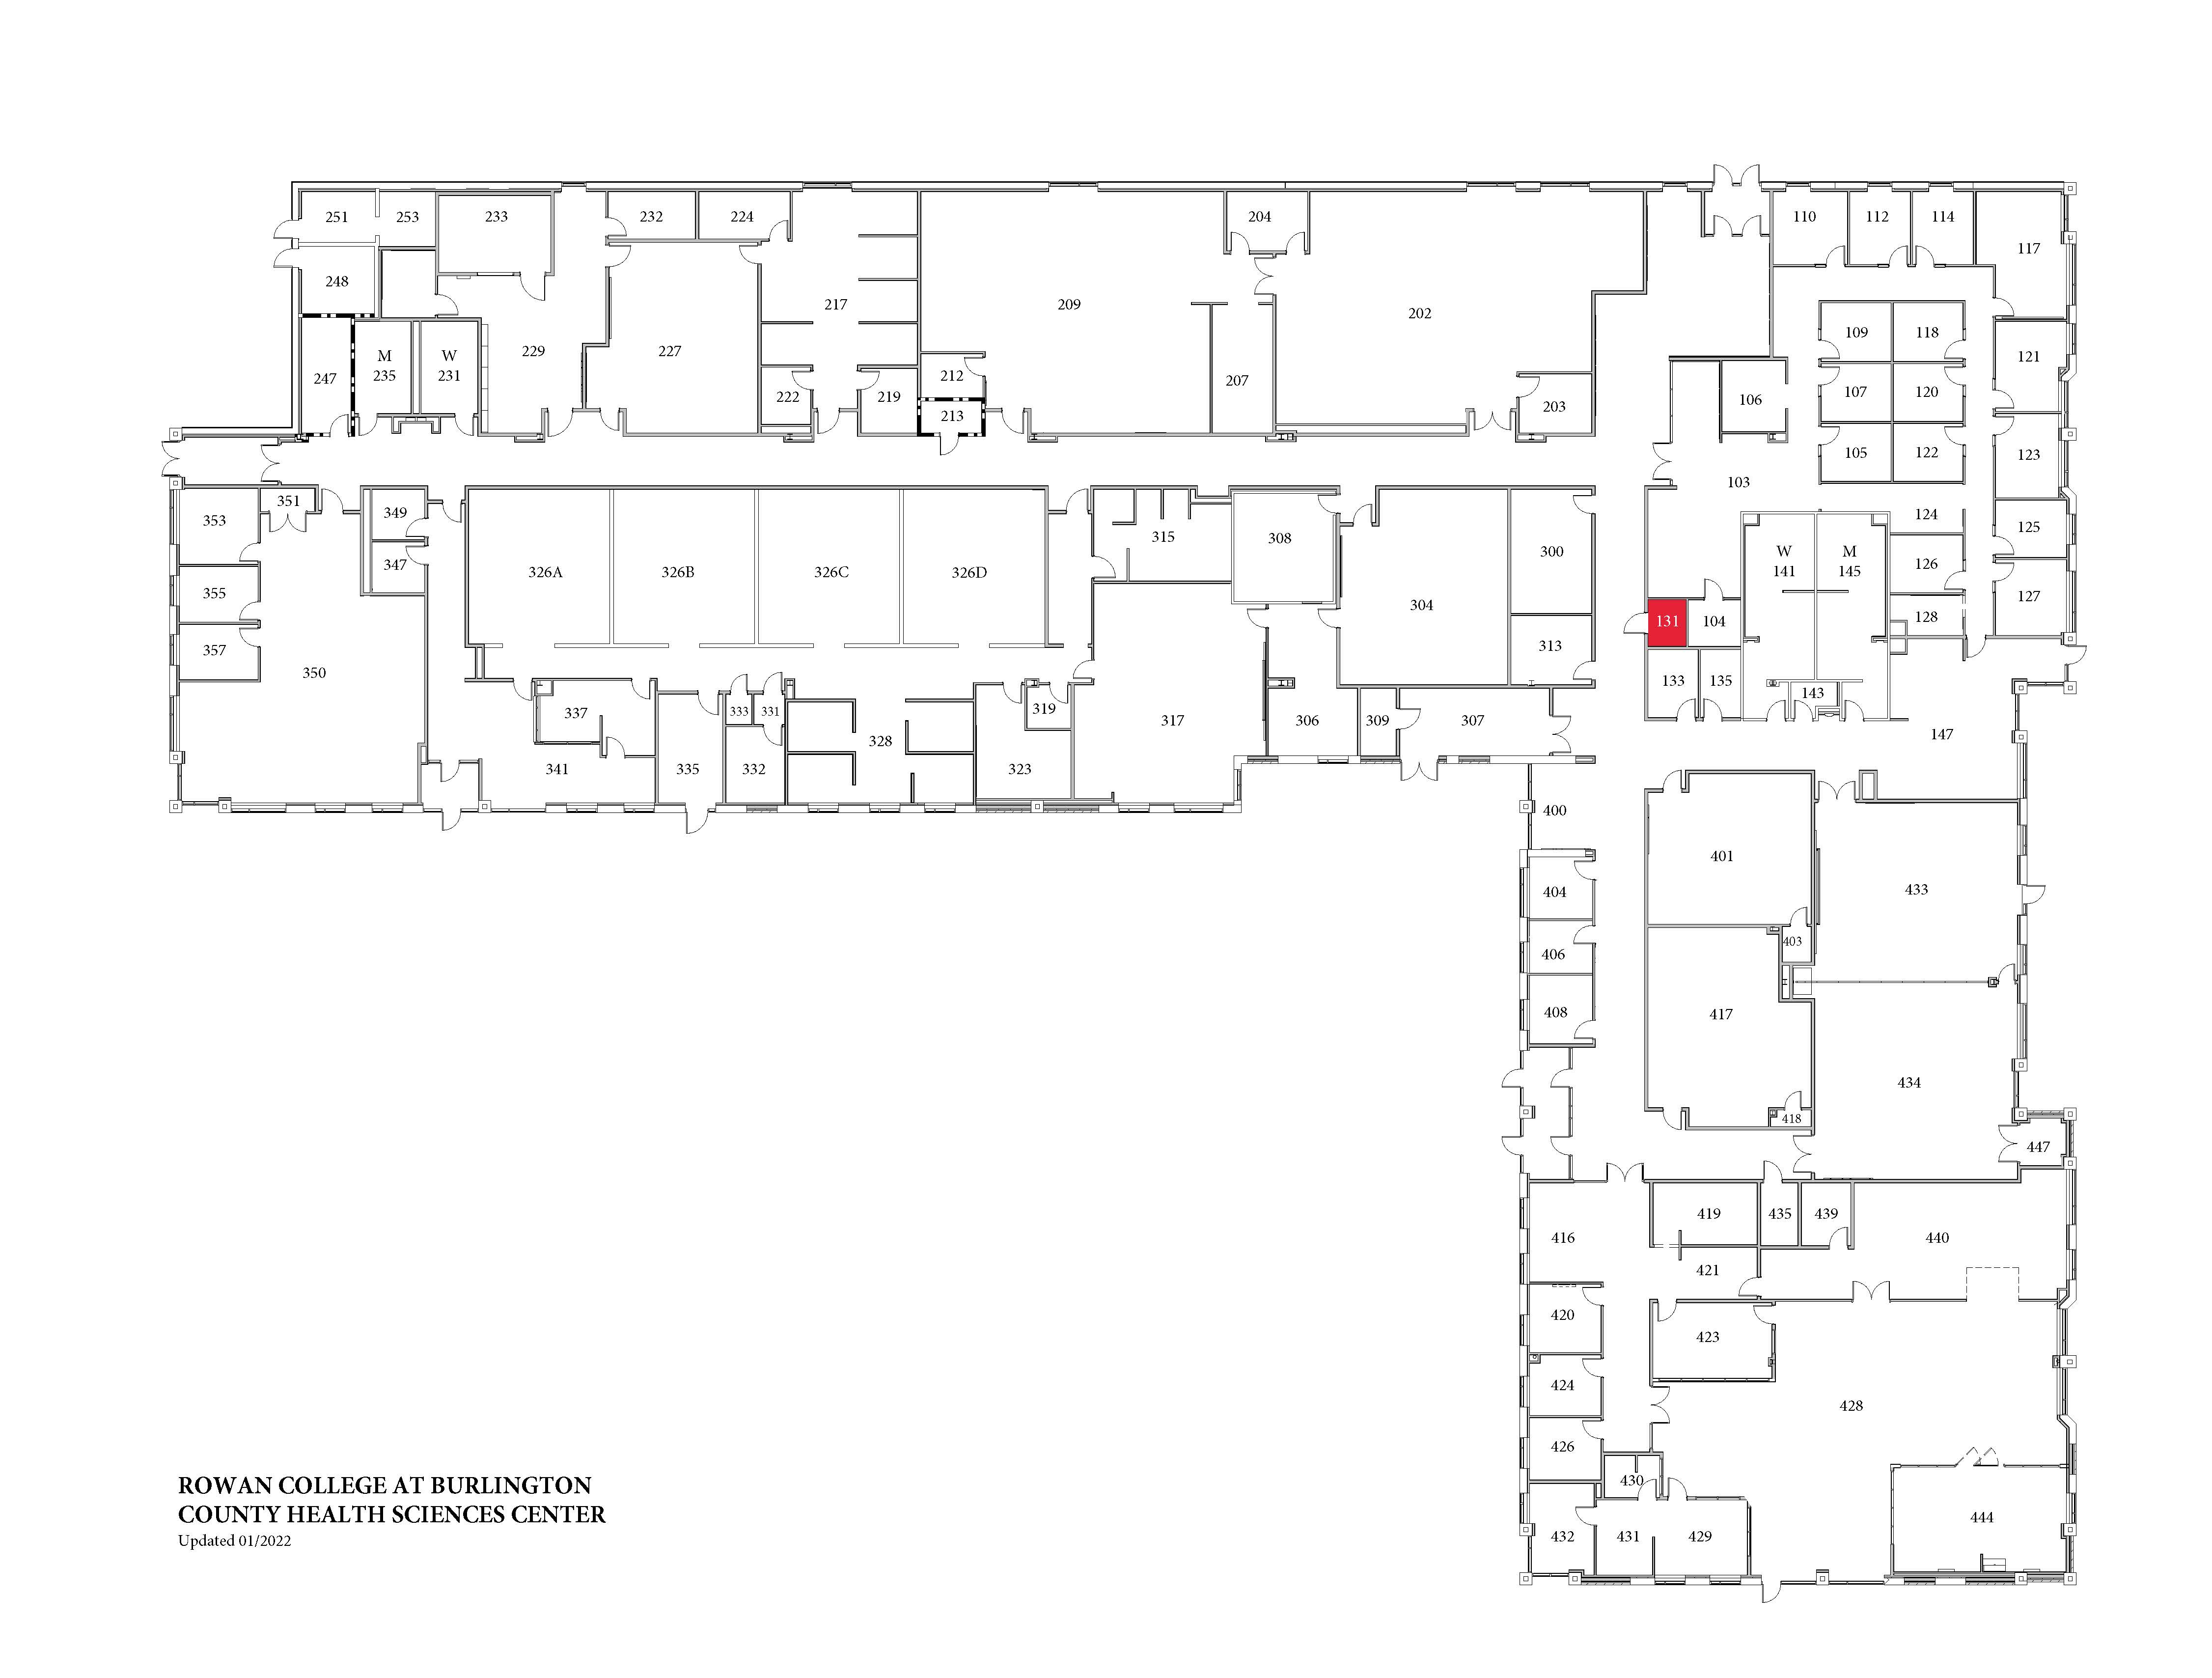 floor plan of Health Sciences Center showing lactation room (131) location